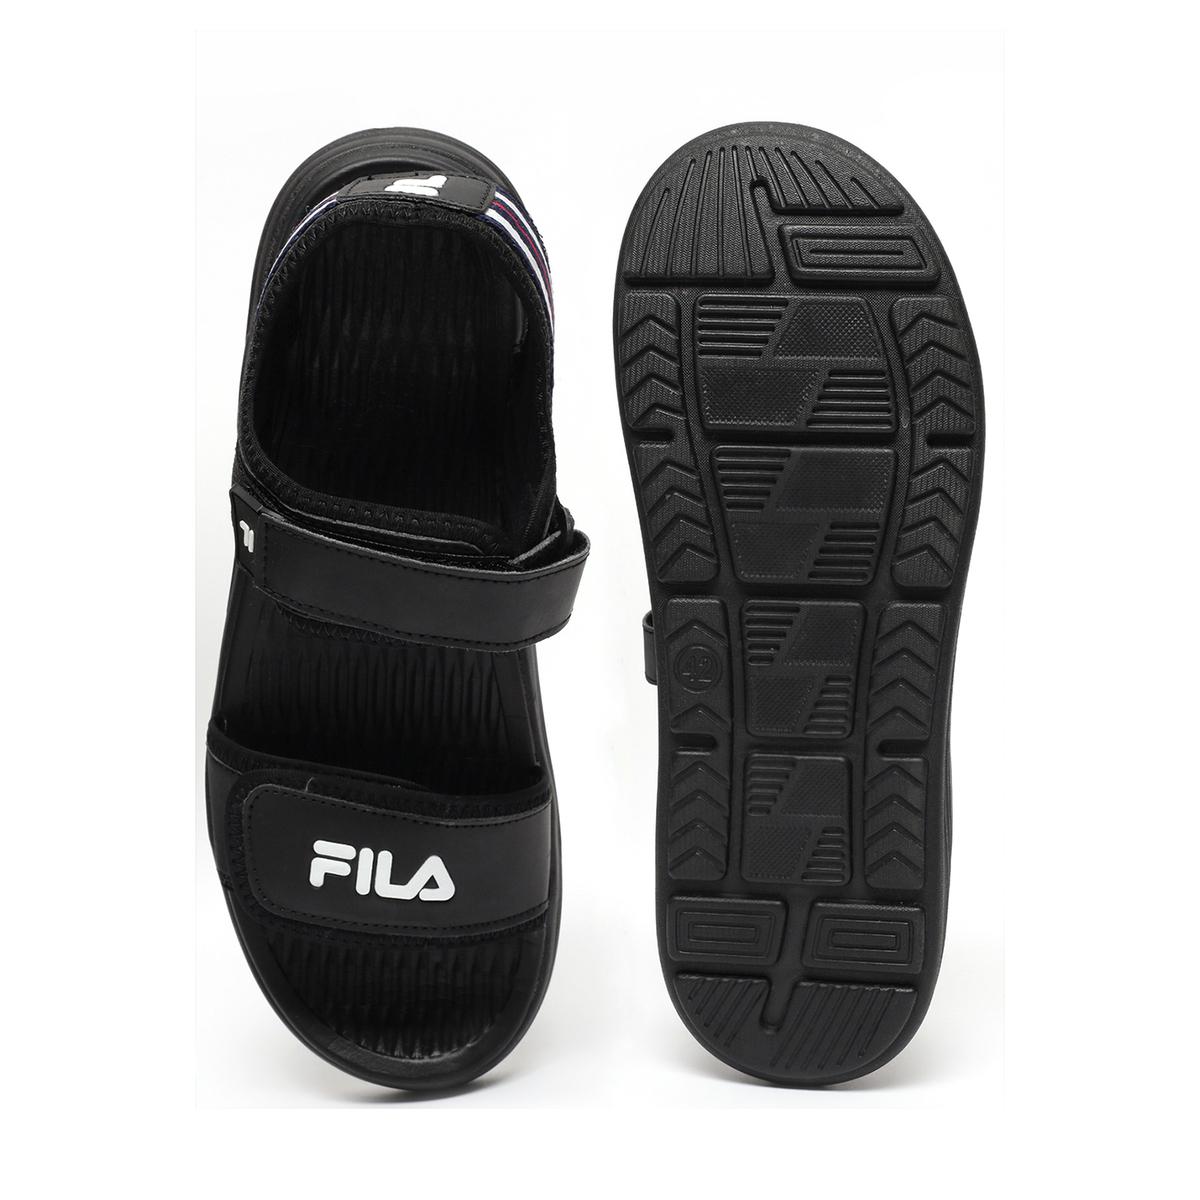 FILA Alter Men Red, Black Sports Sandals - Buy FILA Alter Men Red, Black  Sports Sandals Online at Best Price - Shop Online for Footwears in India |  Flipkart.com